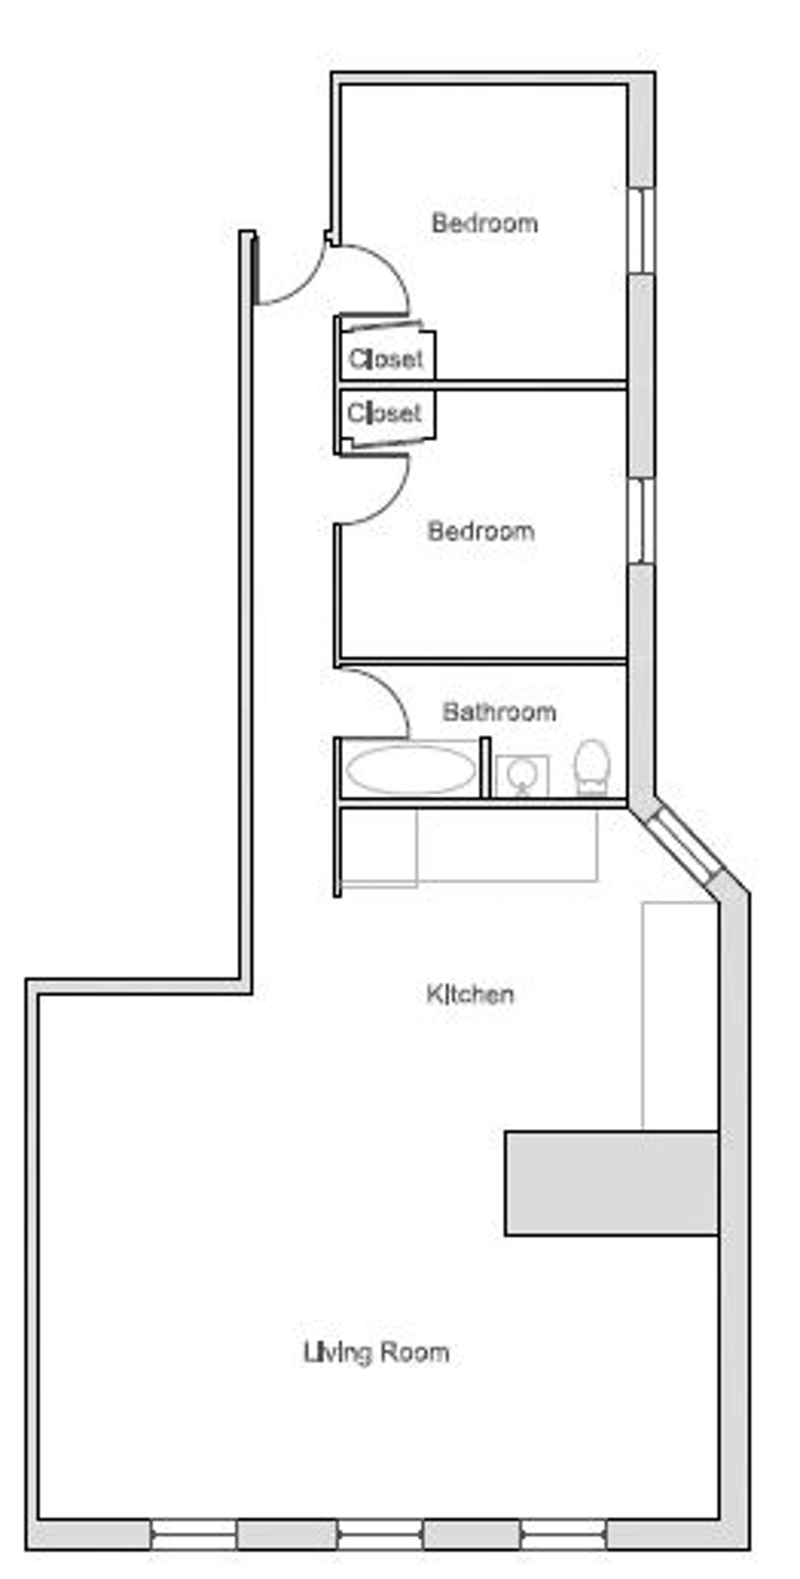 Floorplan for 215 West 116th Street, 7A